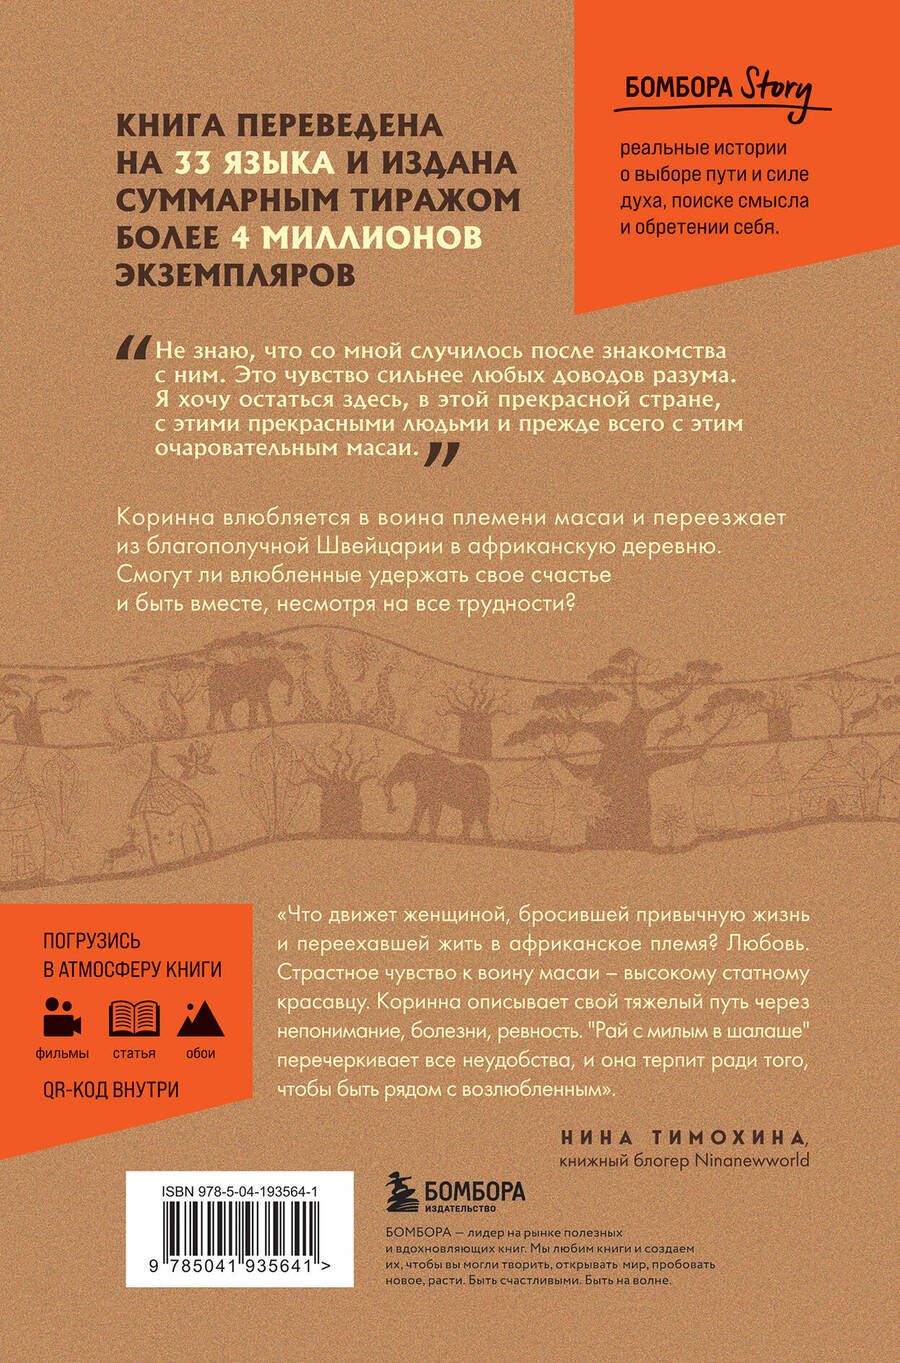 Обложка книги "Коринна Хофманн: Белая масаи. Когда любовь сильнее разума"